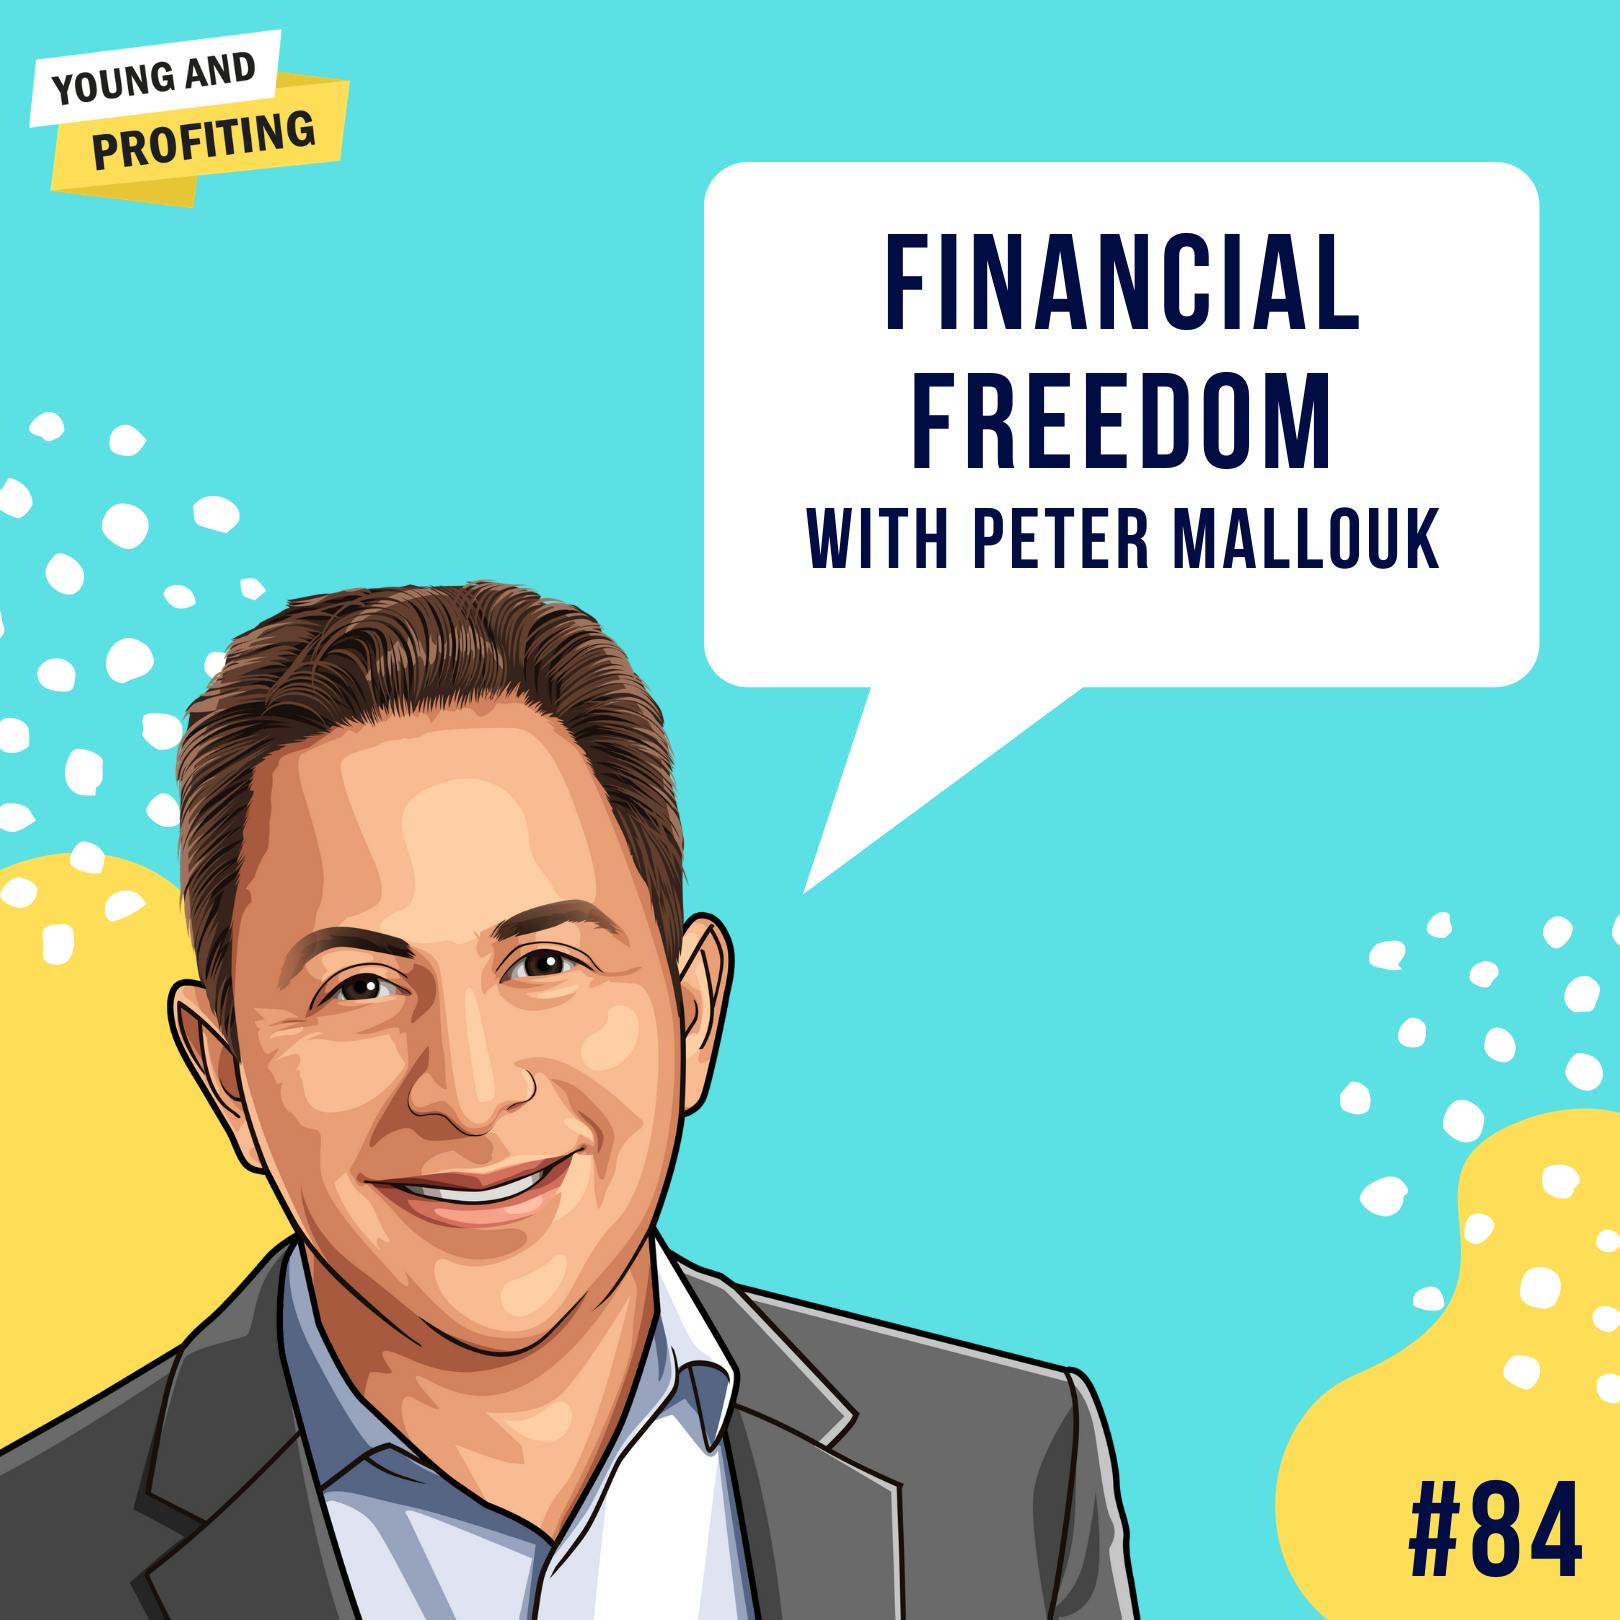 Peter Mallouk: The Path to Financial Freedom | E84 by Hala Taha | YAP Media Network